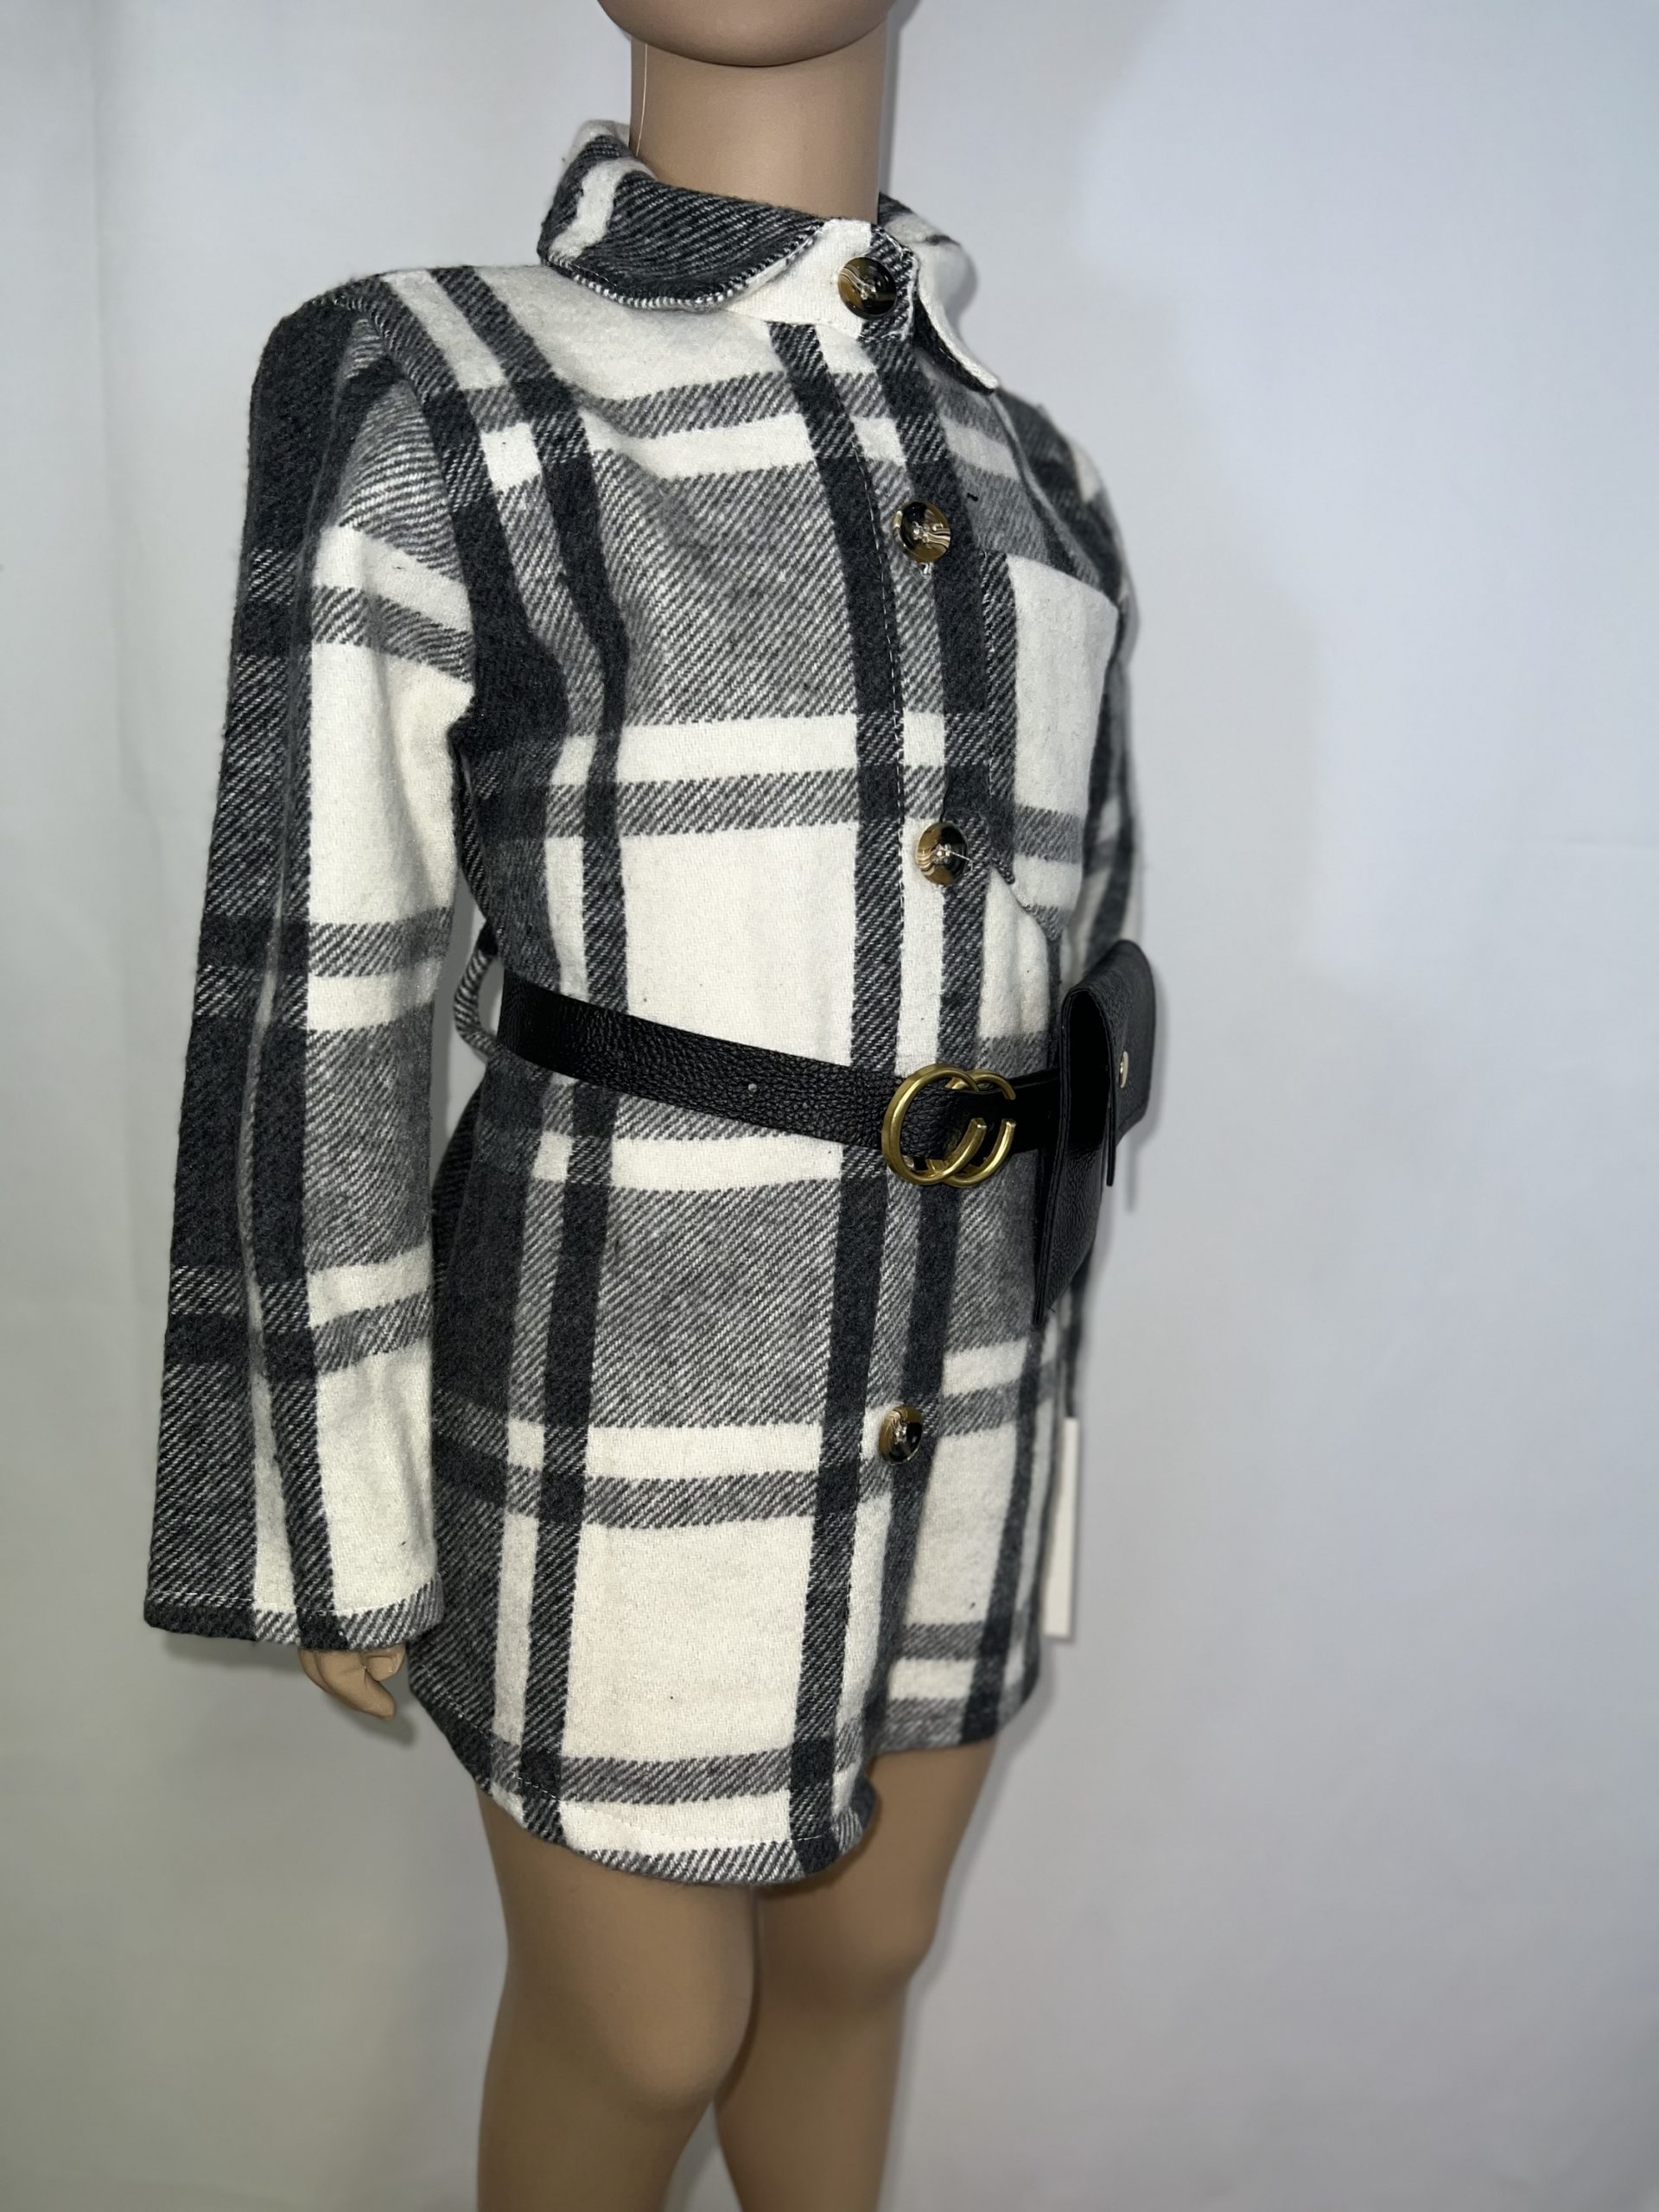 Geruite blouse met bijpassende heup-riem tasje – zwart/witgeruite blouseShoppenvooriedereen